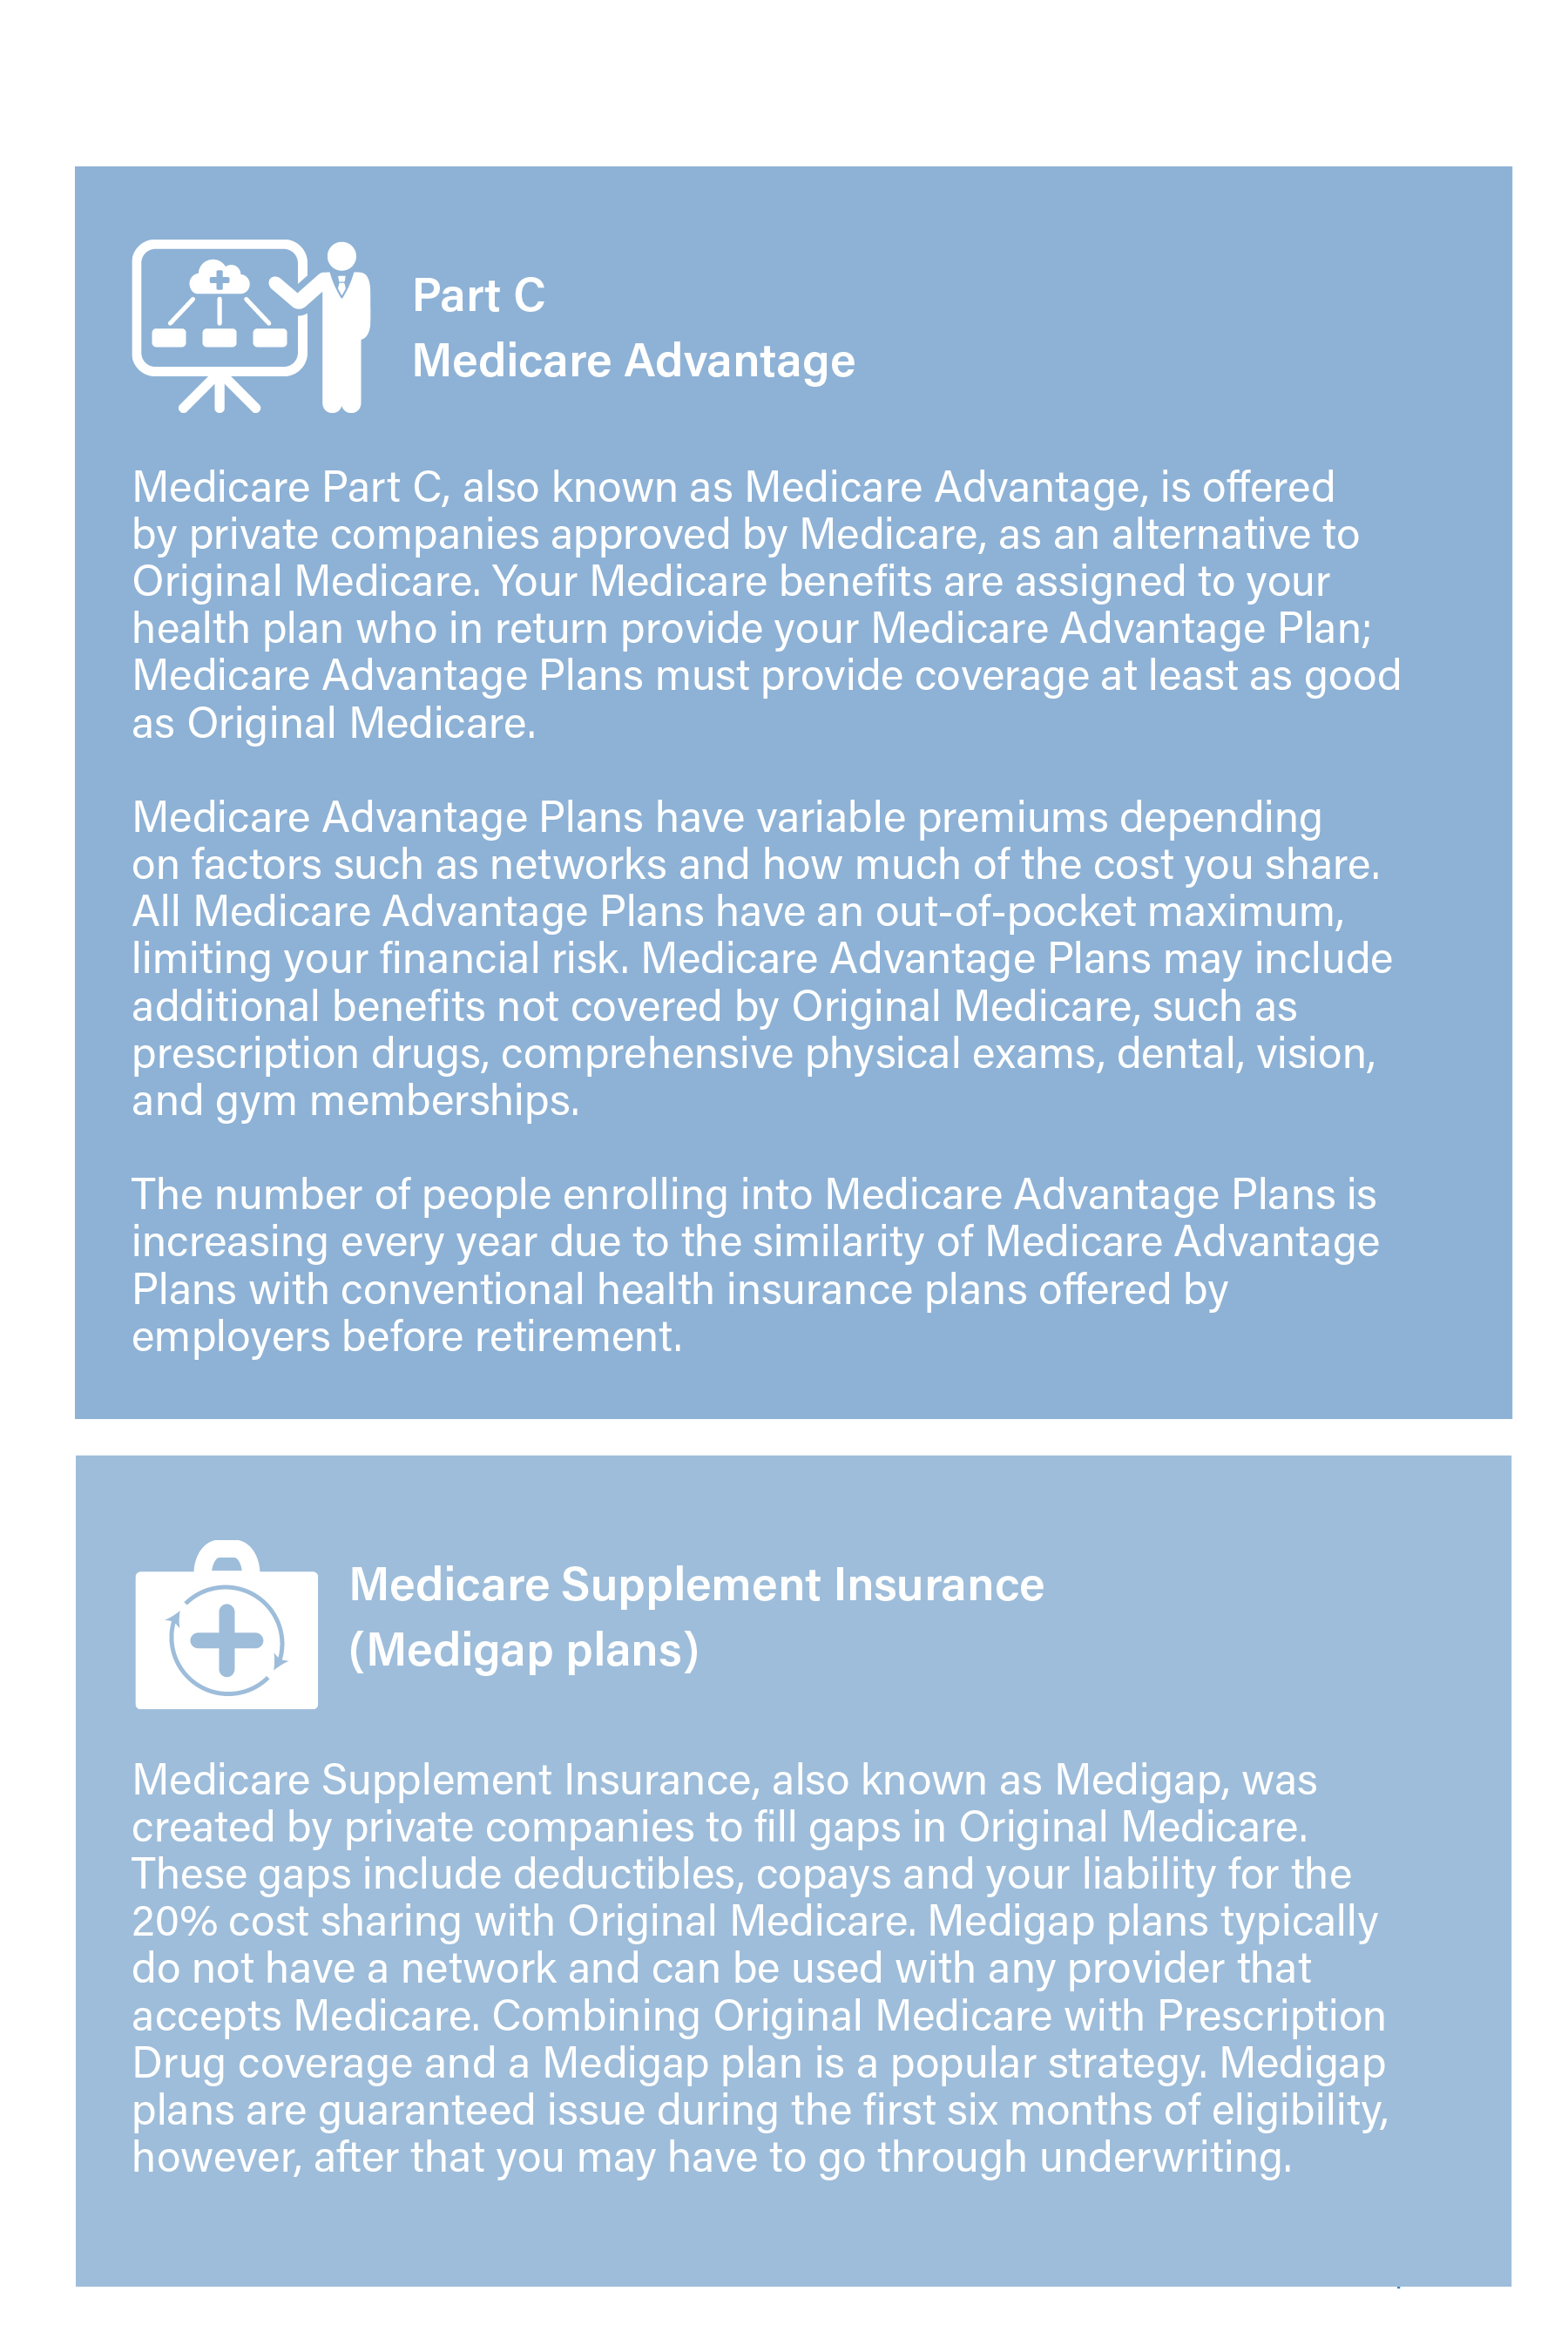 Medicare for Minnesotans Brochure LeClair Group